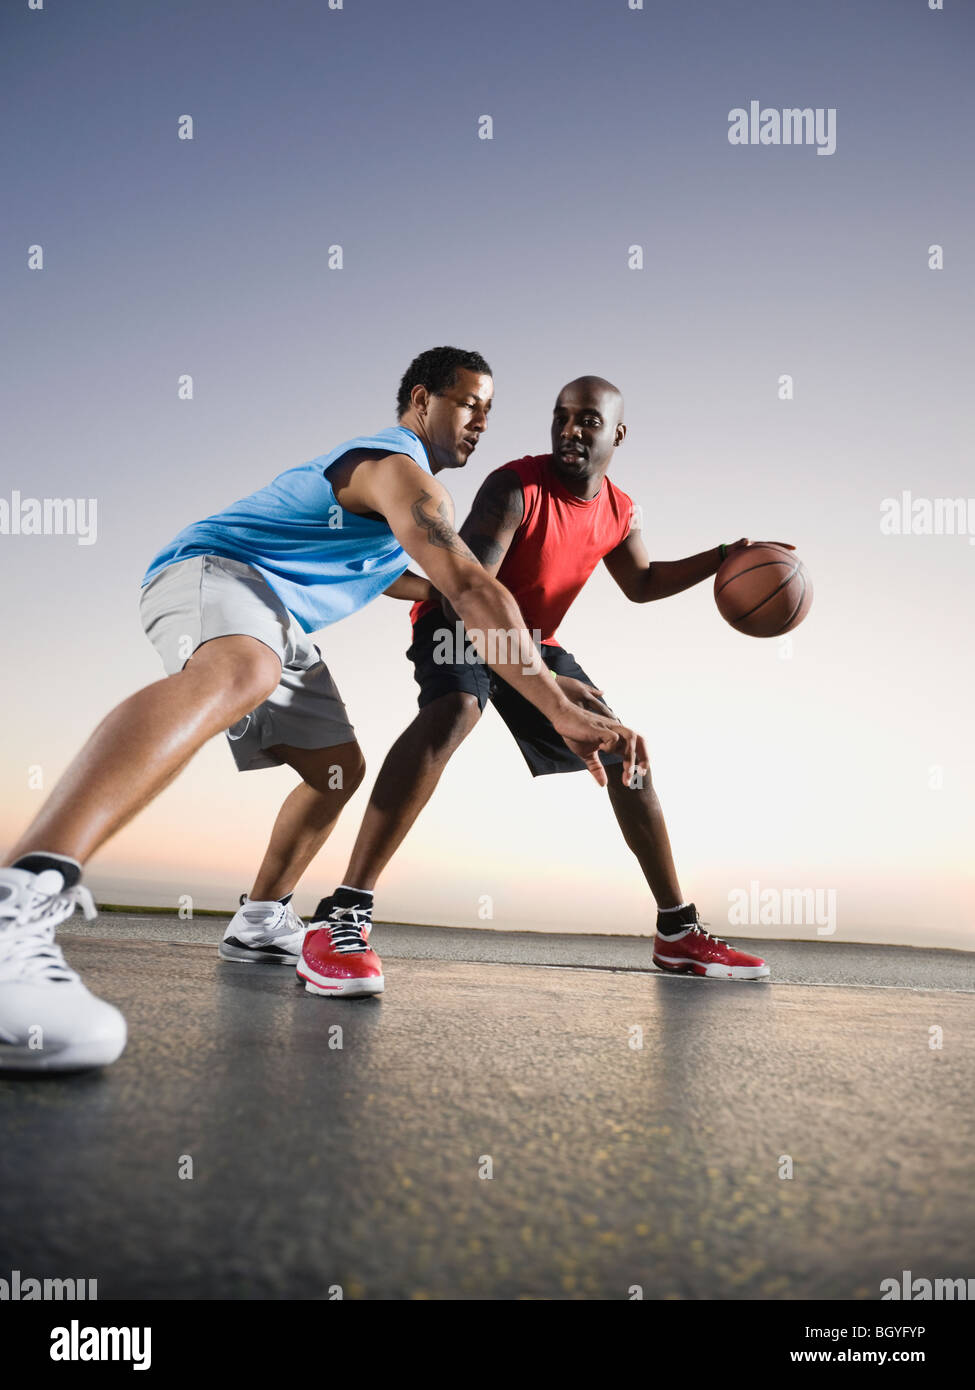 Basketball players Stock Photo